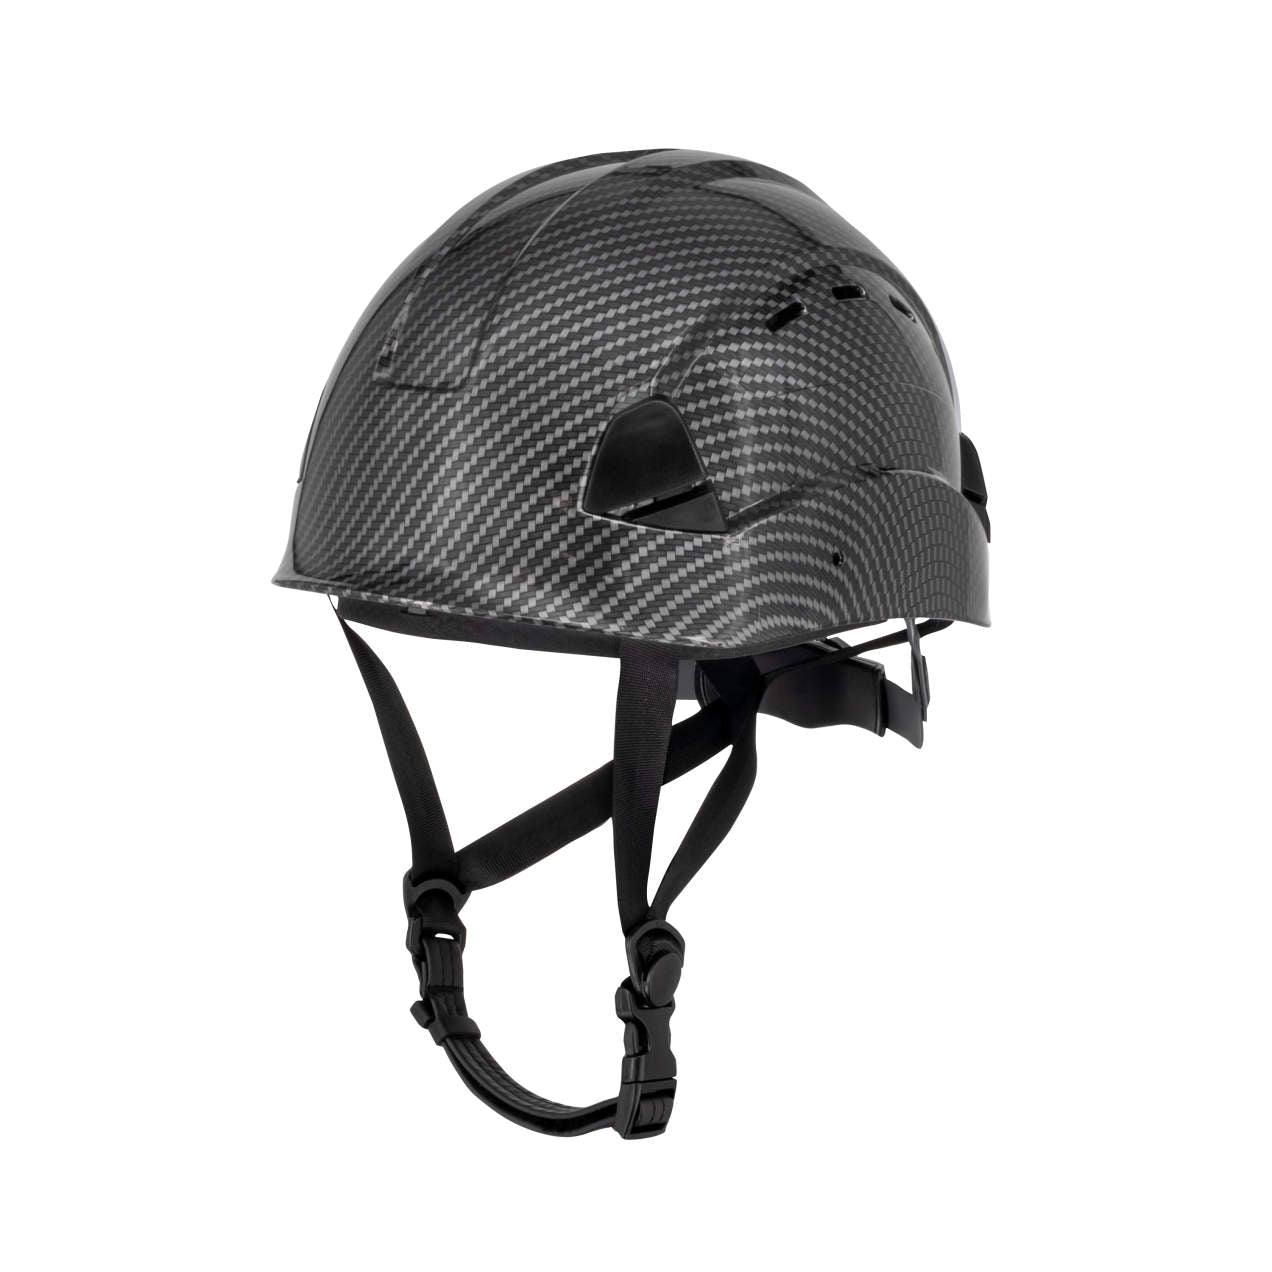 DPG22V Type 2 Vented Safety Helmet